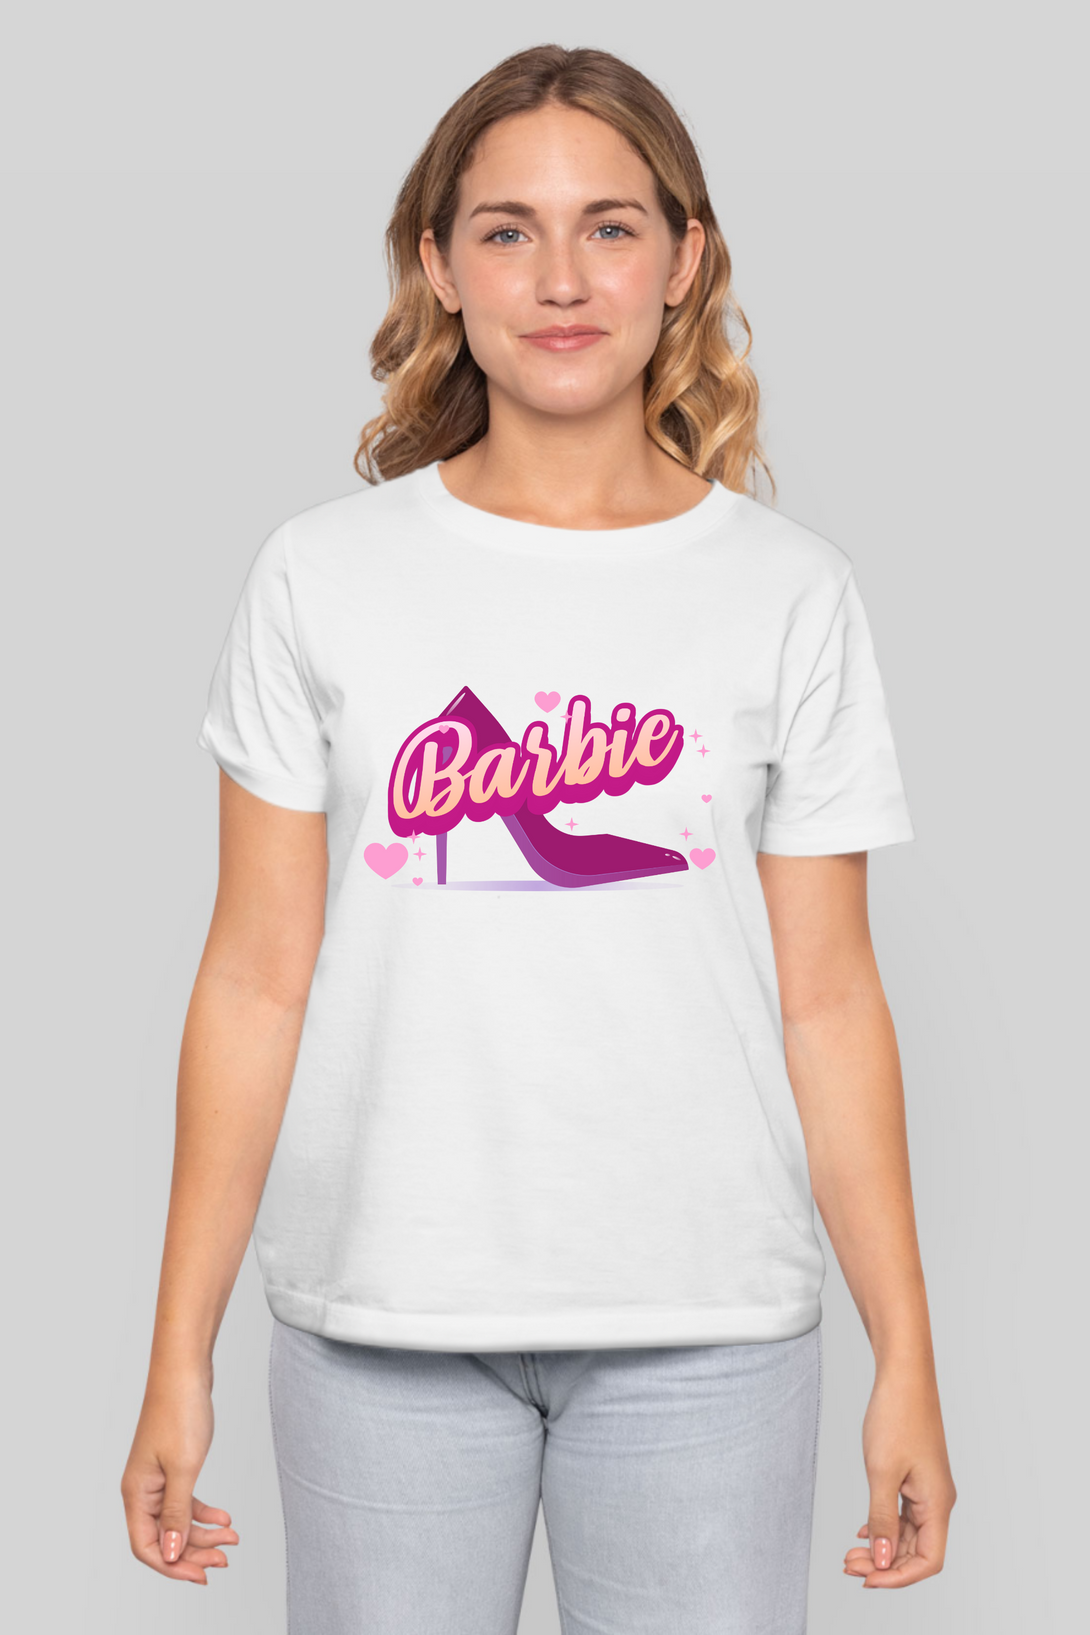 Barbie Sandal Printed T-Shirt For Women - WowWaves - 7